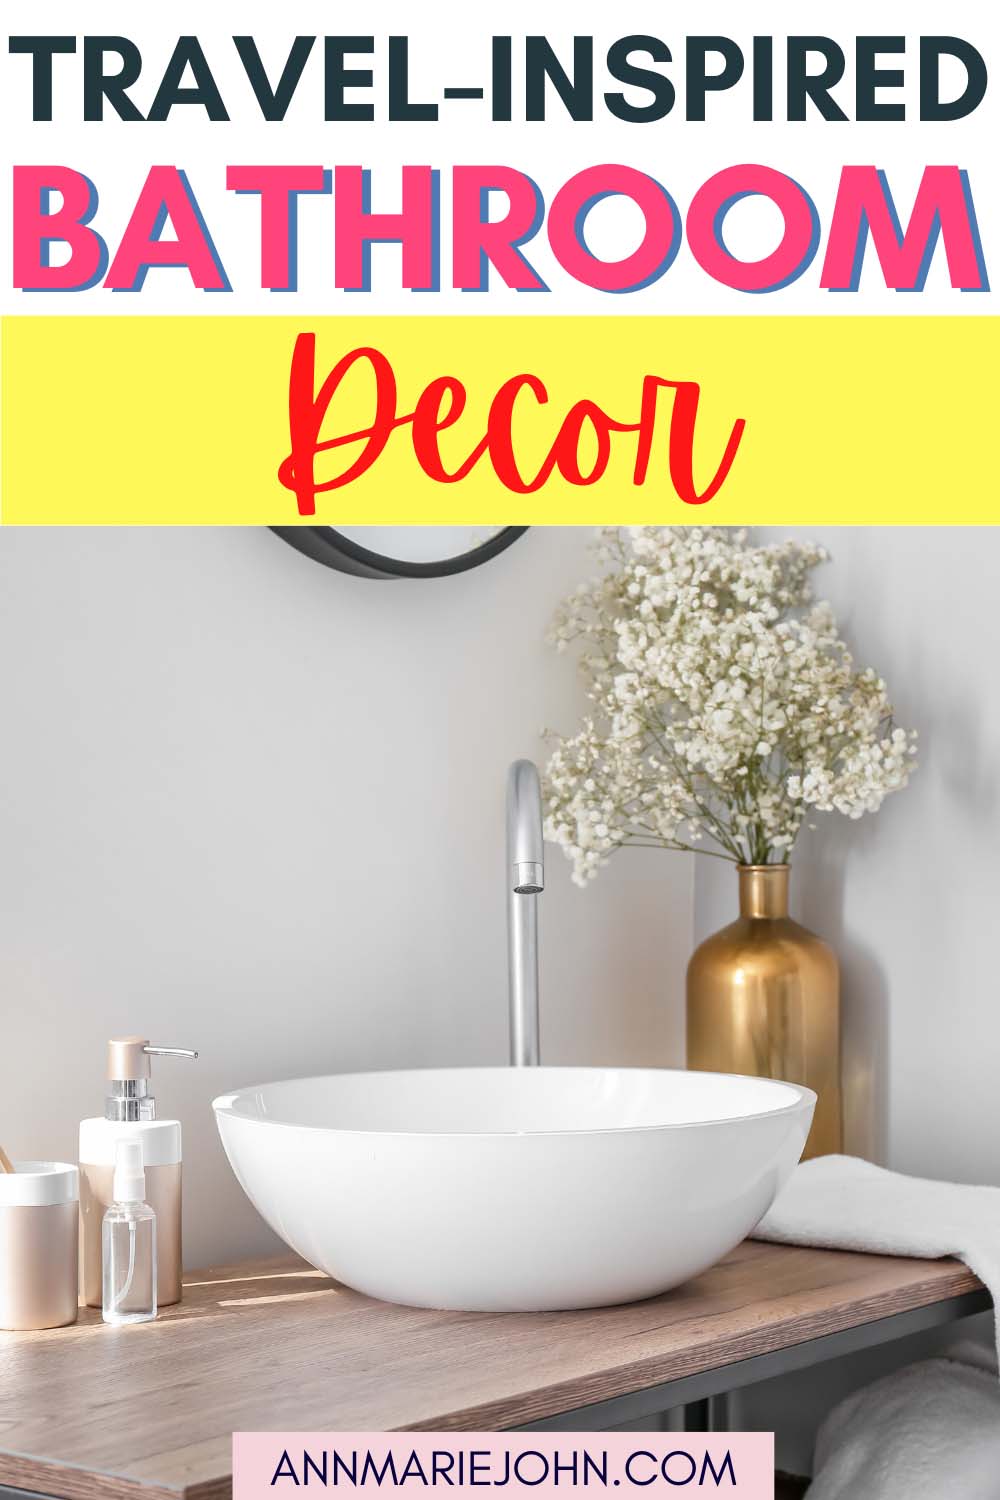 Travel-Inspired Bathroom Decor